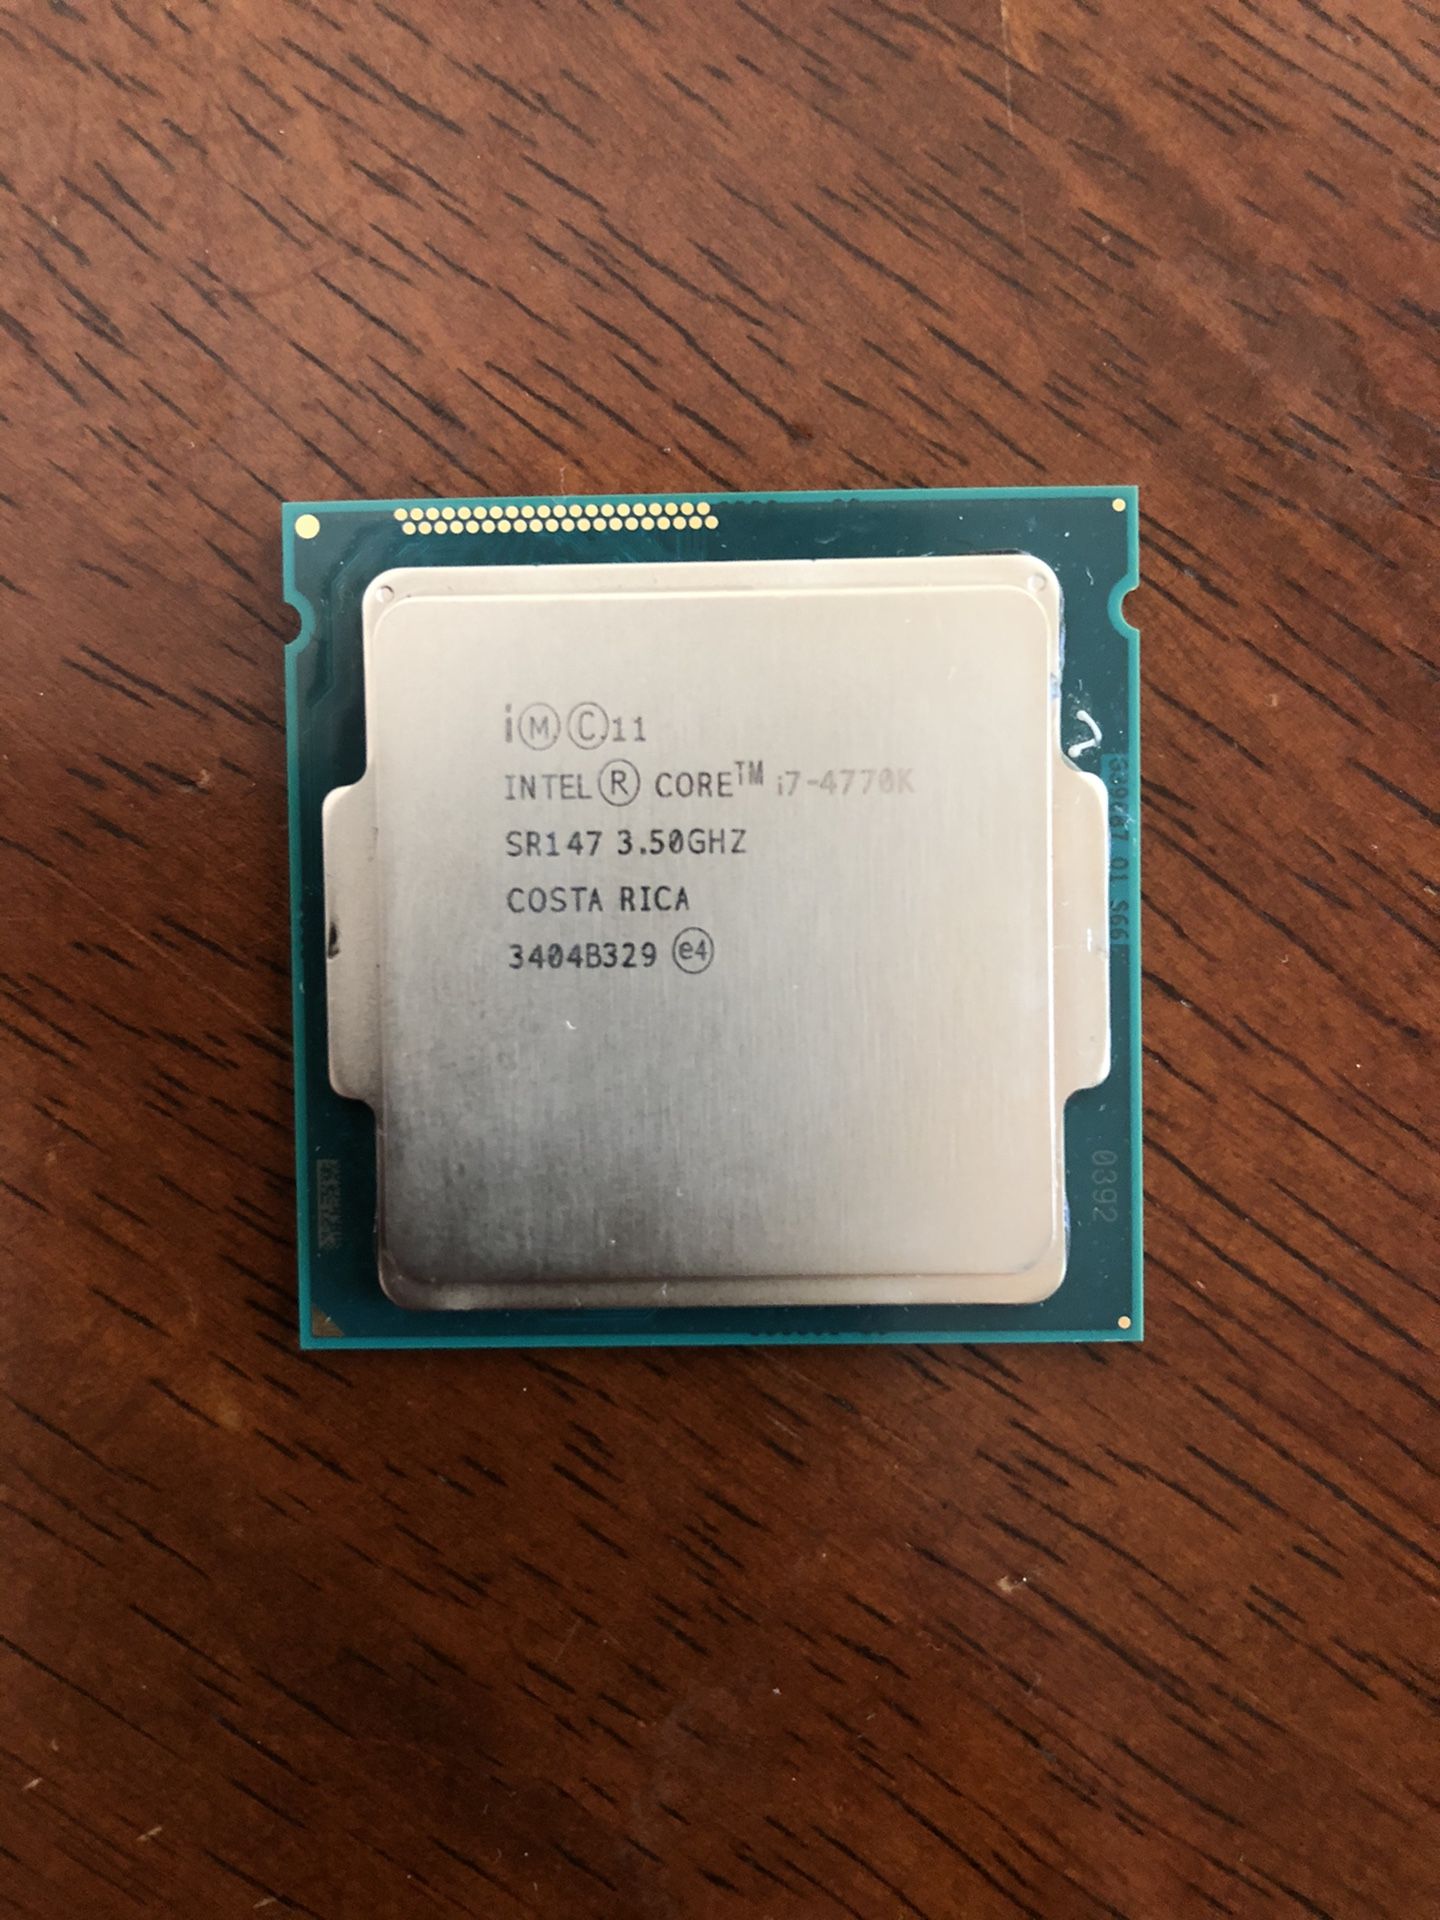 Intel core i7 4770k processor